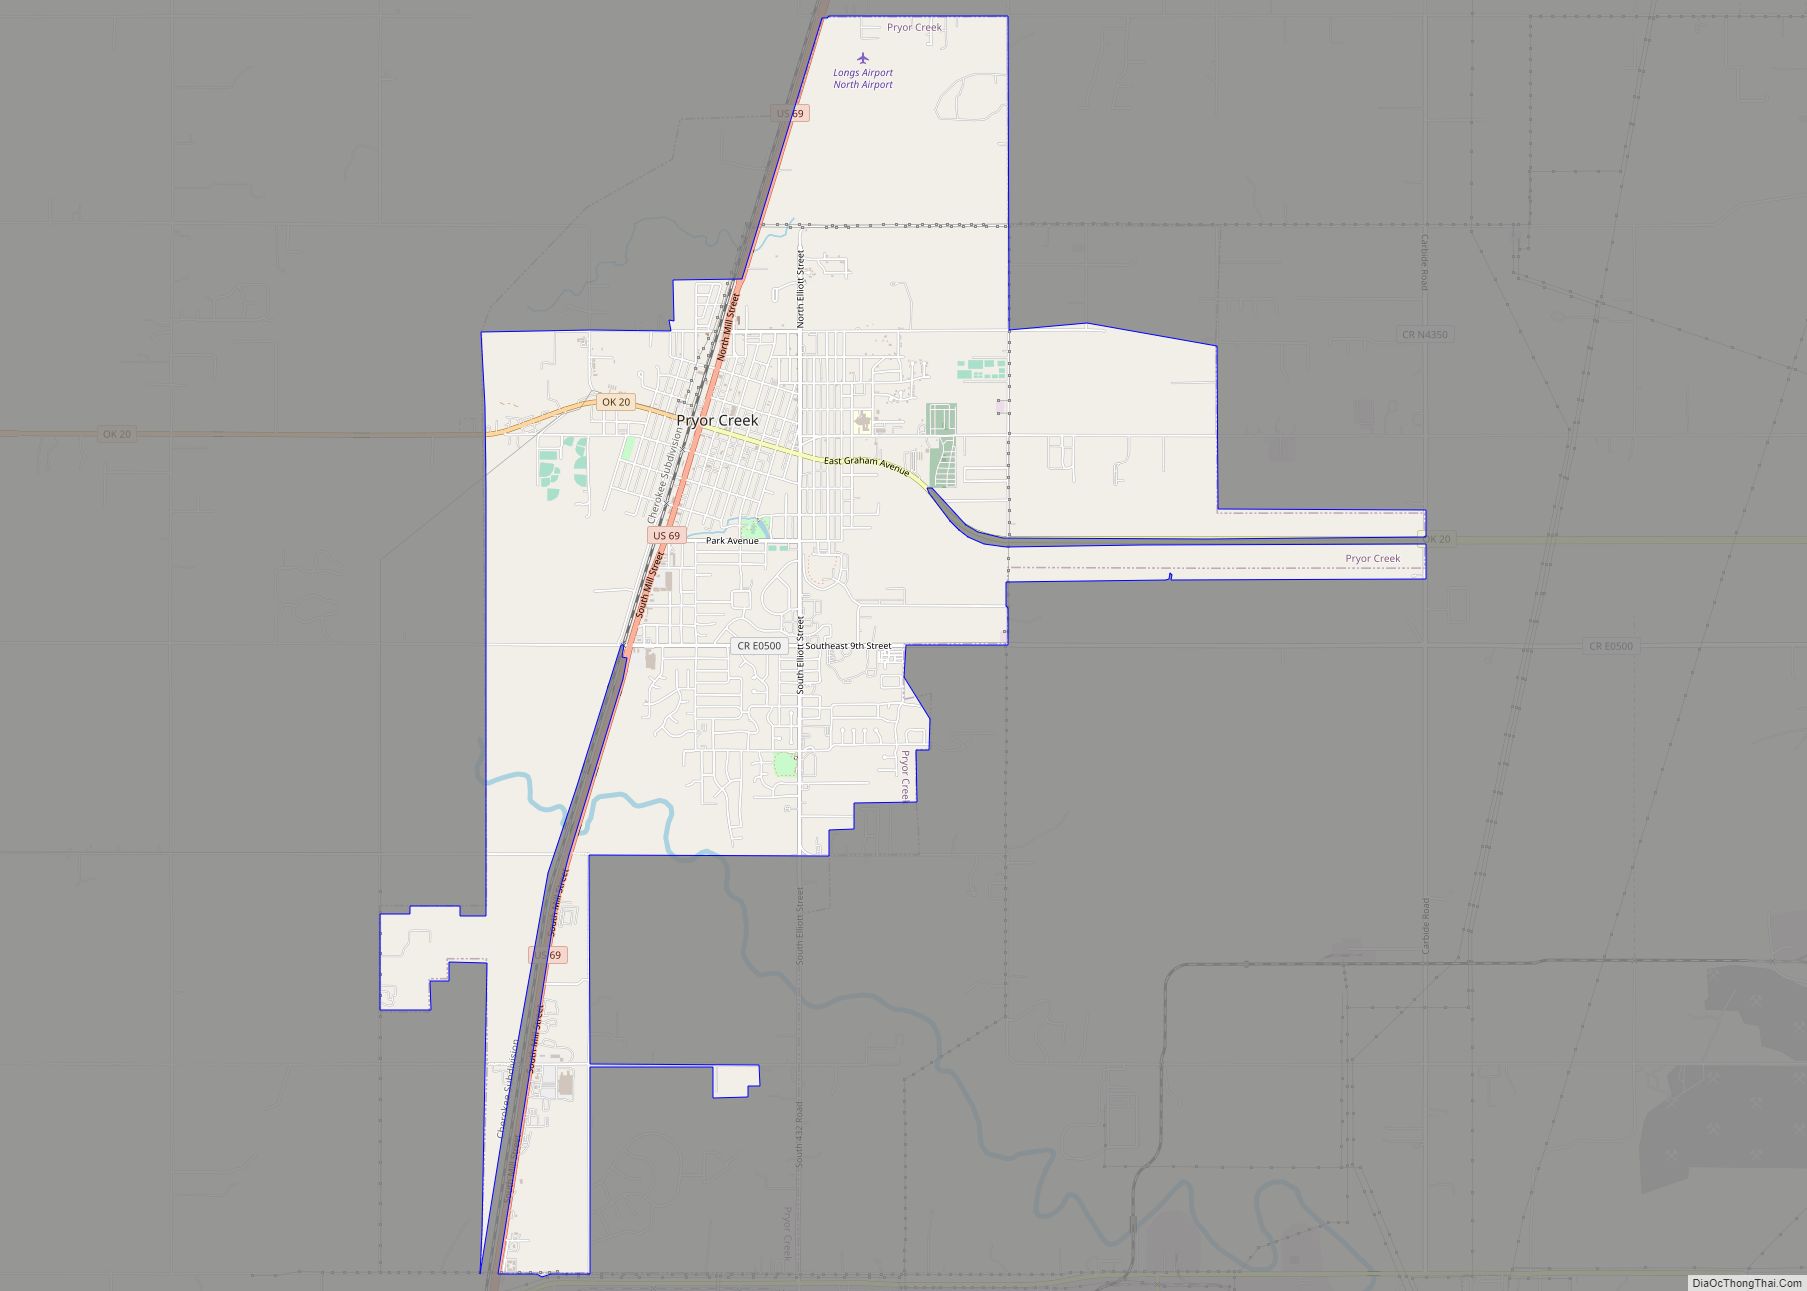 Map of Pryor Creek city